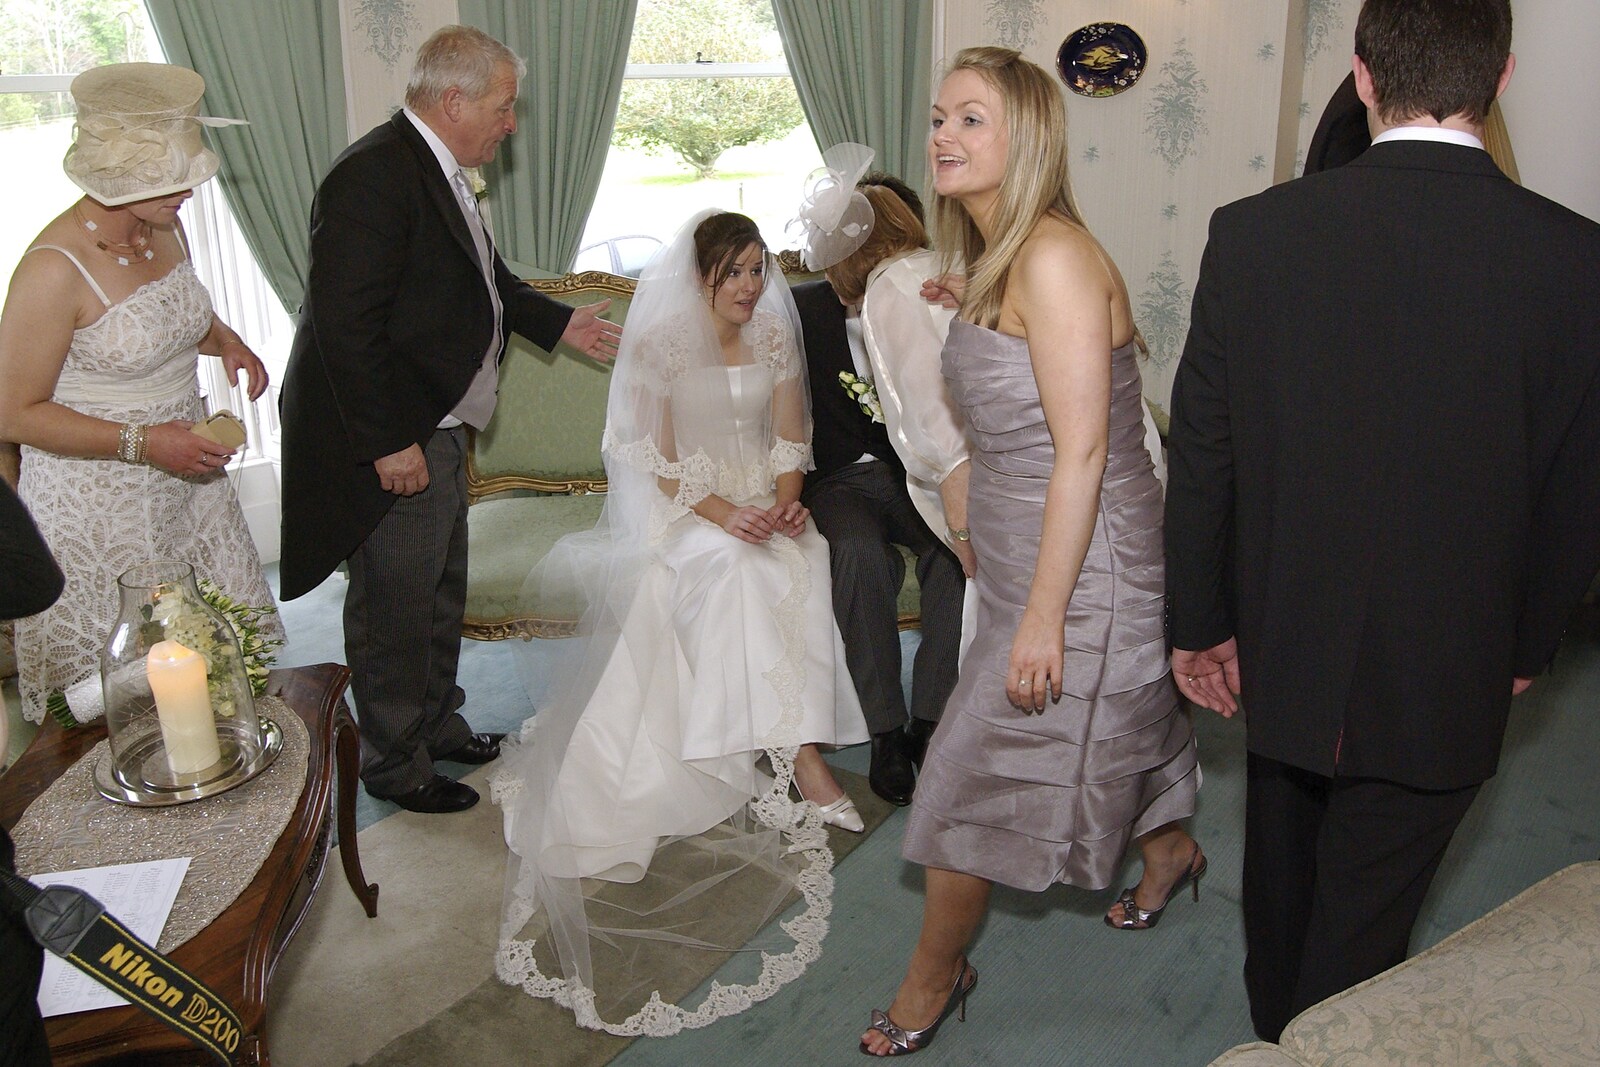 Paul and Jenny's Wedding, Tralee, County Kerry, Ireland - 3rd May 2008: The bridesmaid runs around